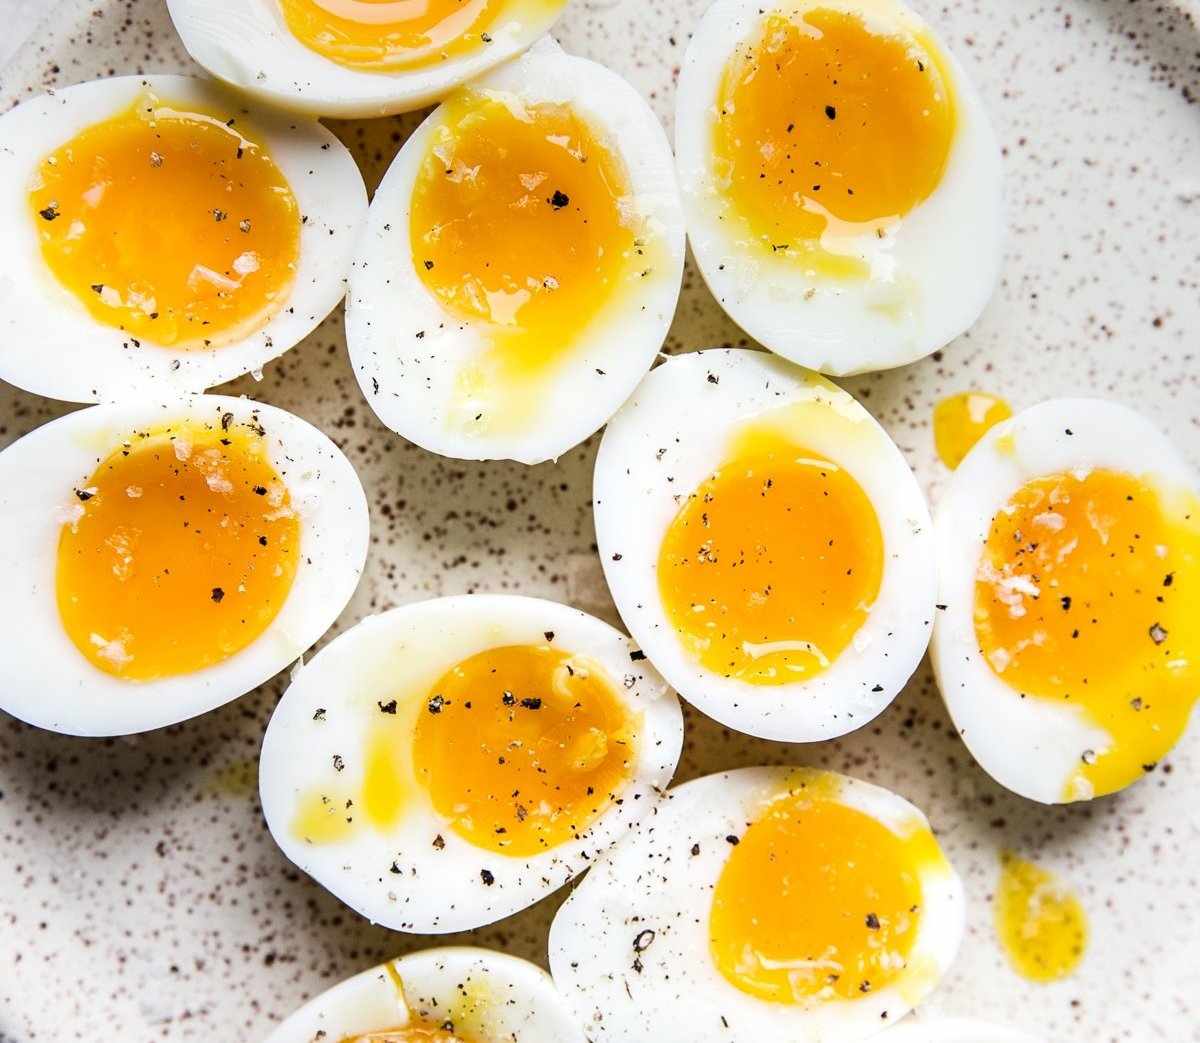 Weich gekochte Eier sind im Gegensatz zu hartgekochten gut verträglich